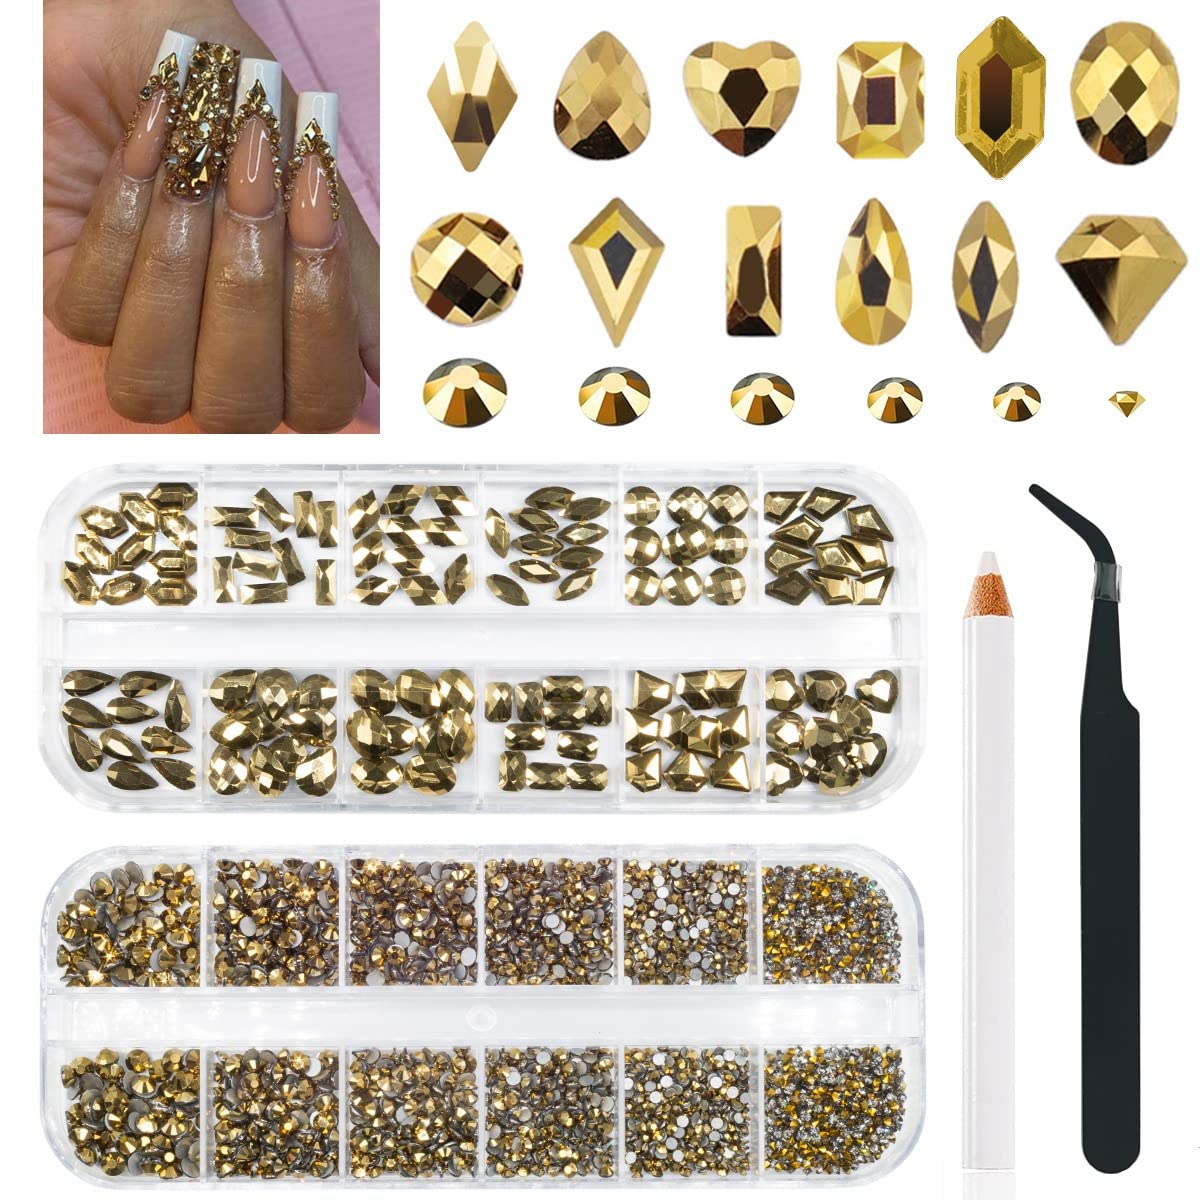 2630Pcs Nail Rhinestones Crystal Flatback Rhinestones Round Beads Glass Gems Stones Nail Art Gems Diamonds Jewels Multi Shapes Sizes Nail Charms for Nail DIY Mackup Crafts Clothes Shoes Jewelry